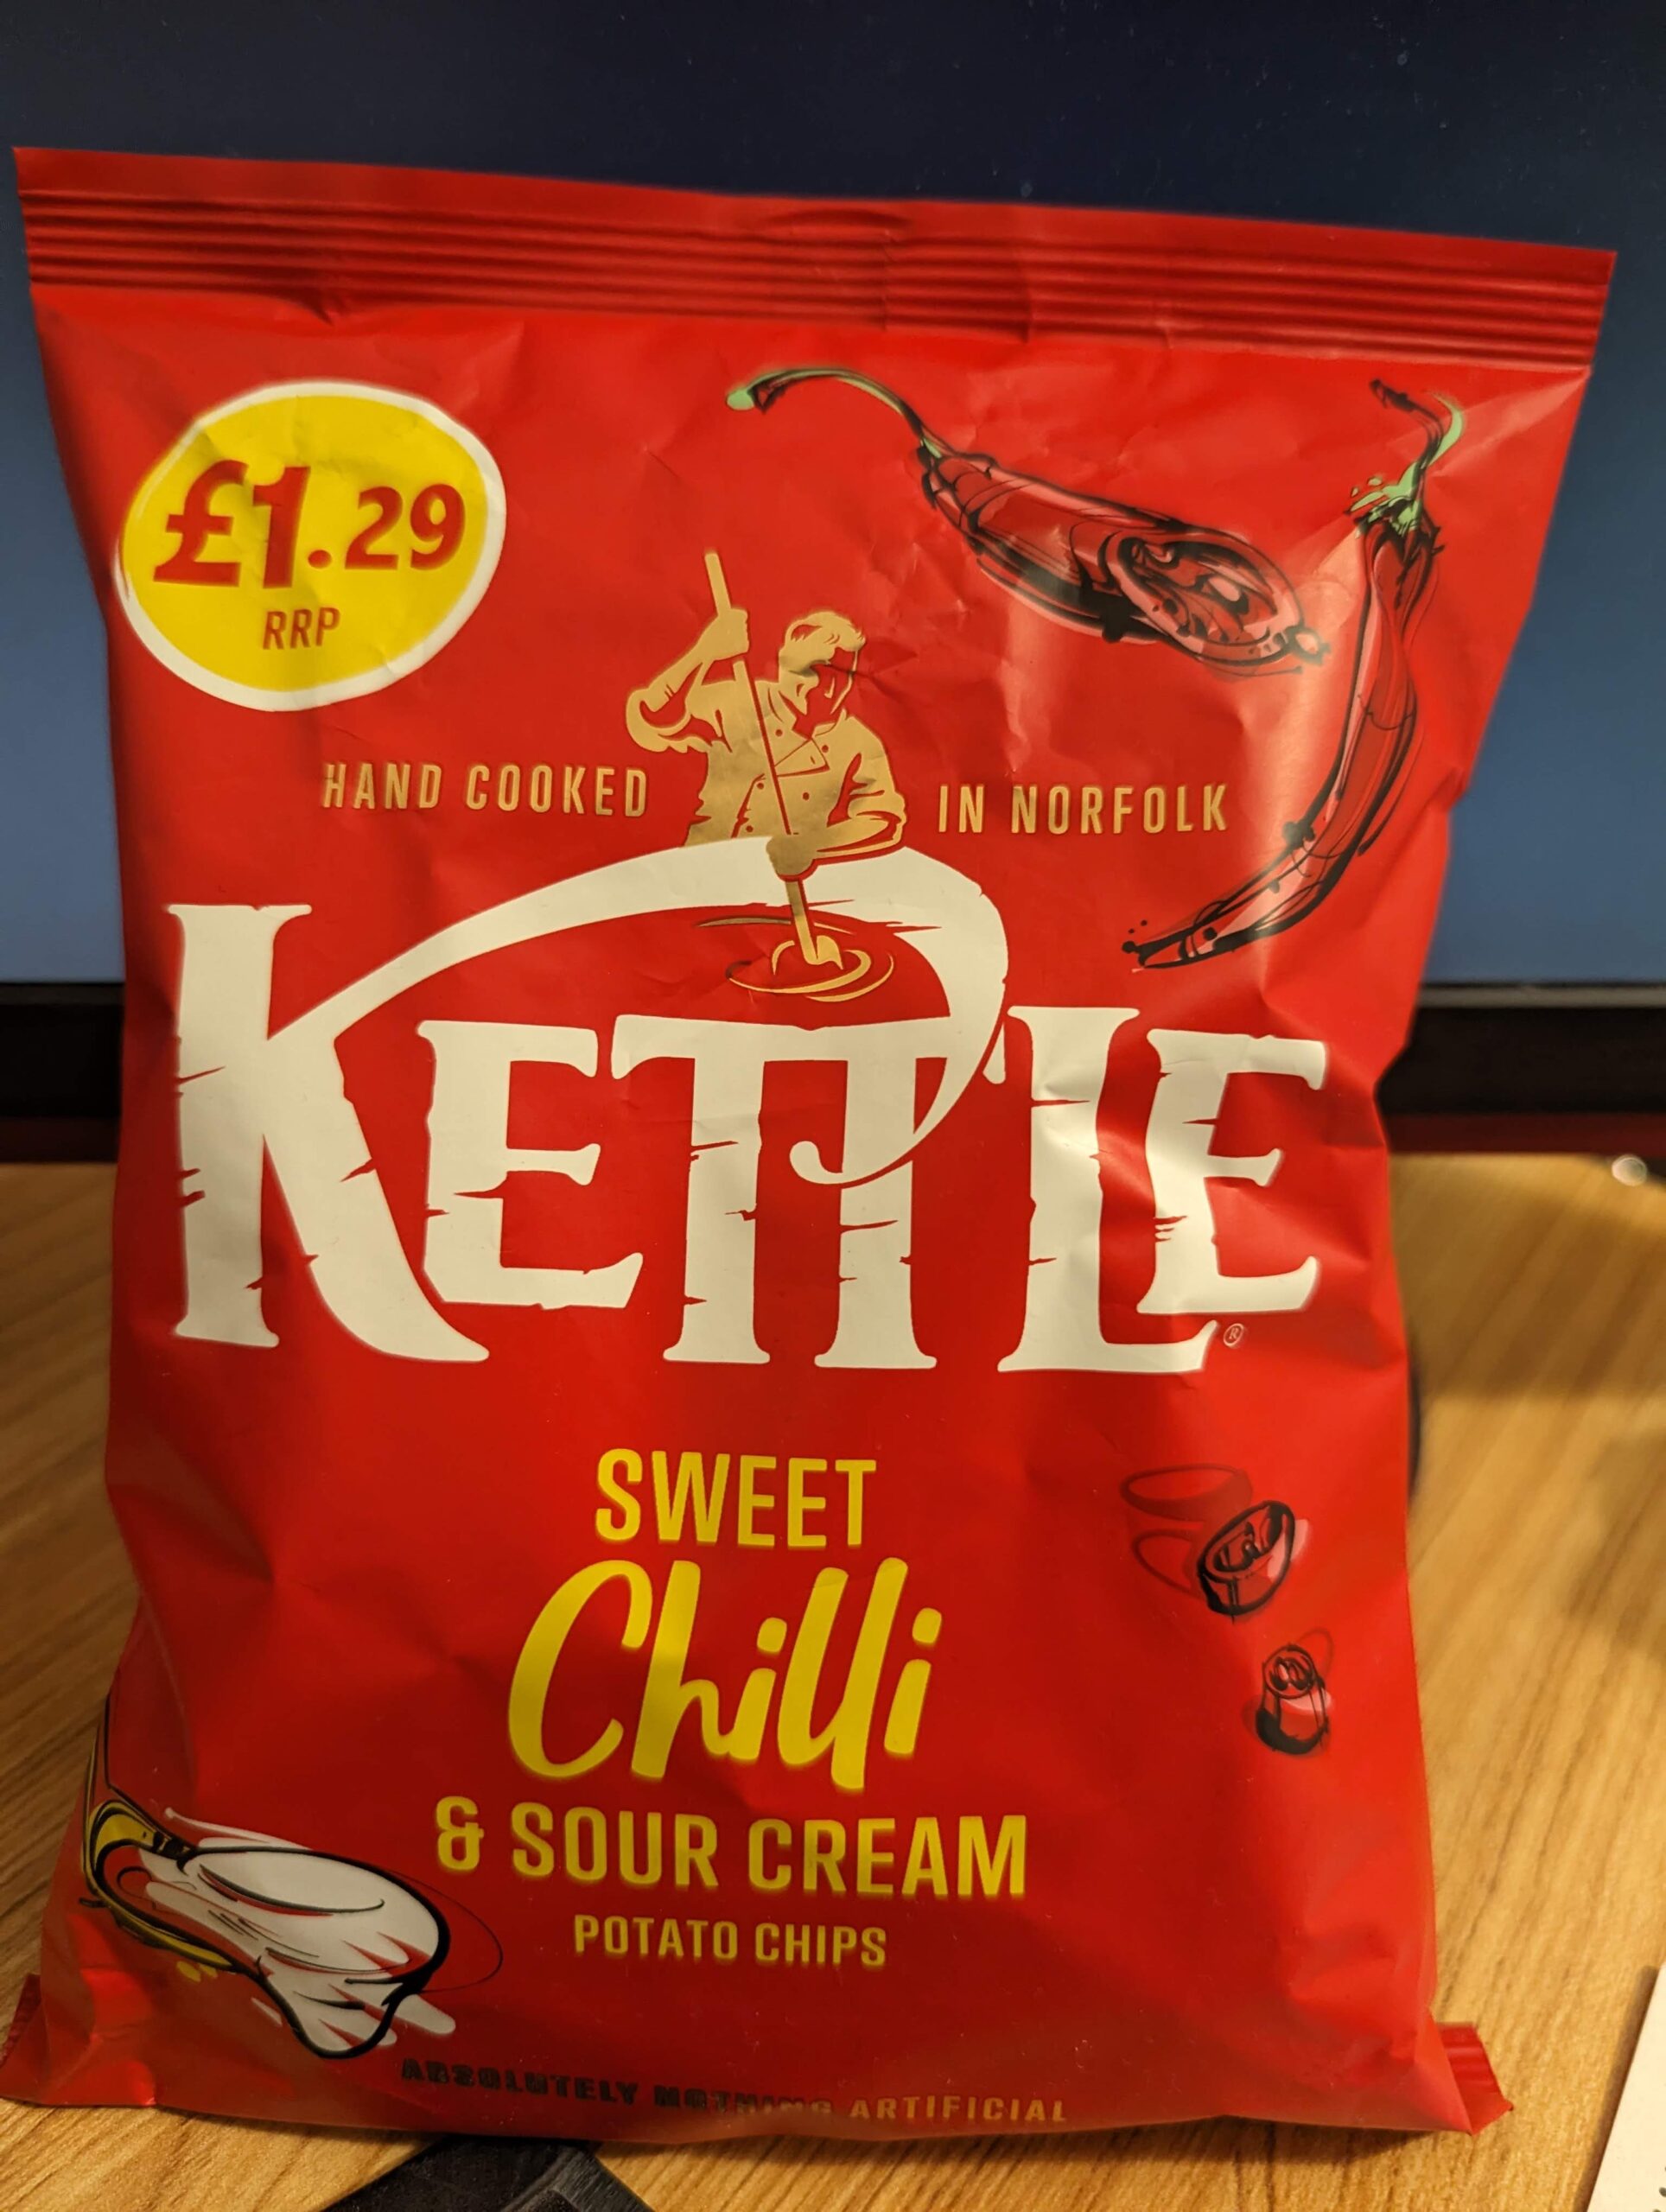 Kettle Sweet Chili & Sour Cream